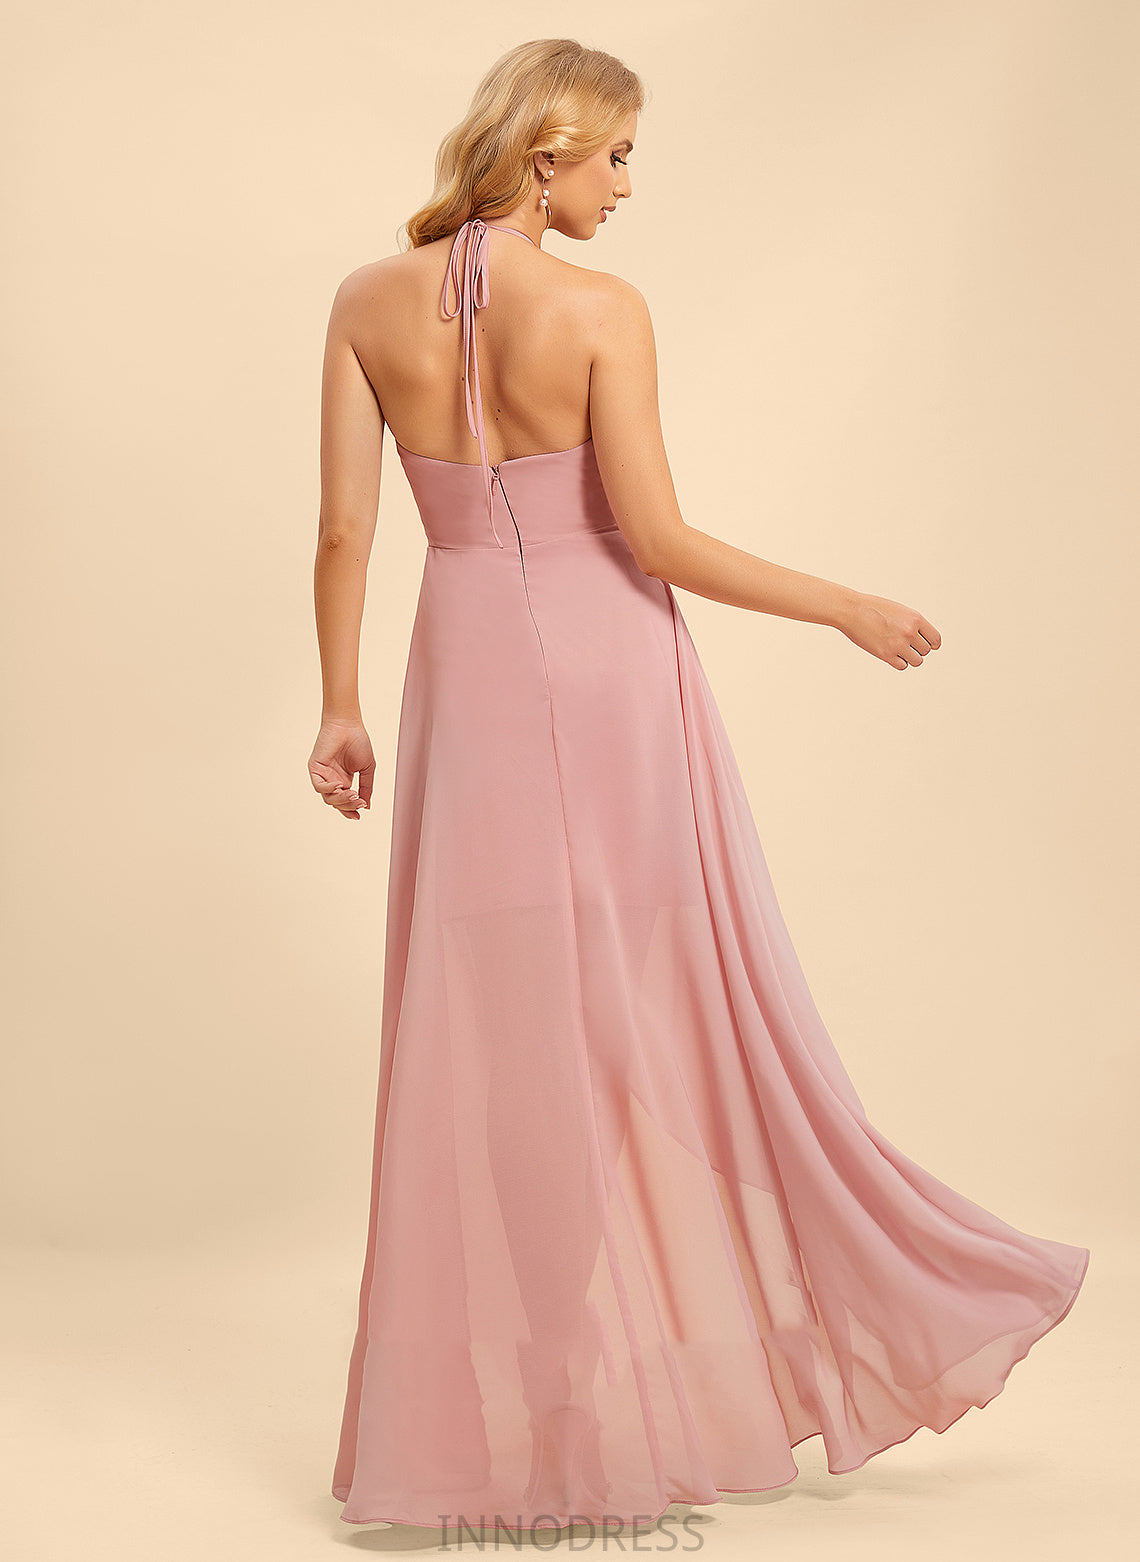 Neckline Asymmetrical Silhouette A-Line Length Ruffle Embellishment Fabric Halter Madge Straps Sleeveless Bridesmaid Dresses